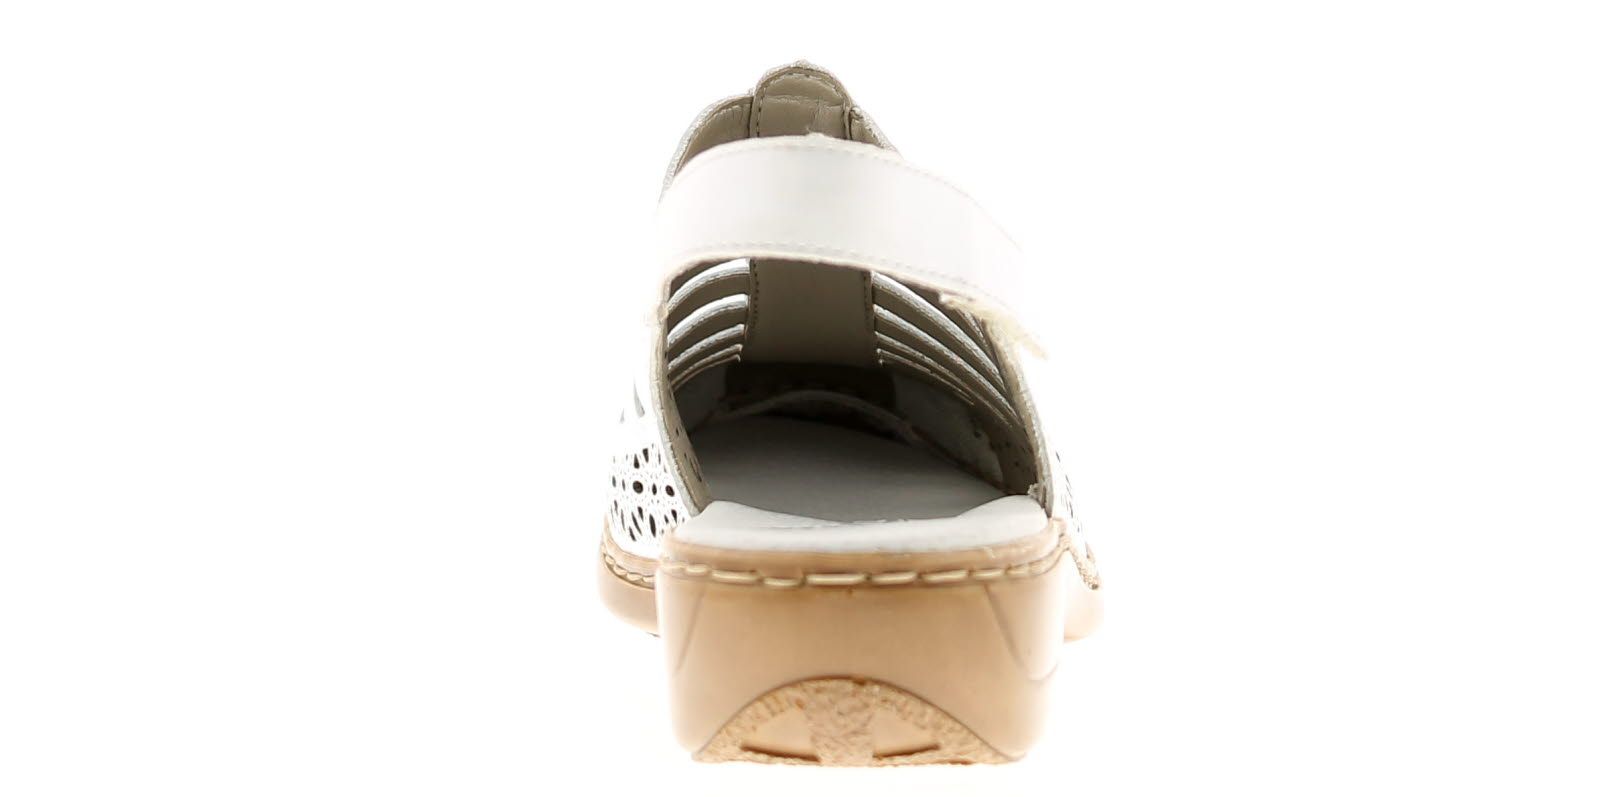 <Ul><Li>Rieker 41355-80 Womens Shoes In White</Li><Li>Ladies Sling Back Leather Upper Sandals With Floral Cut Outs. Touch Fastening Strap. Padded Leather Insole.  Shock Absorbing Outsole.</Li><Li>Leather Upper</Li><Li>Manmade Lining</Li><Li>Synthetic Sole</Li><Li>Ladies Womens Rieker Summer Sandals Velcro Fastening</Li>